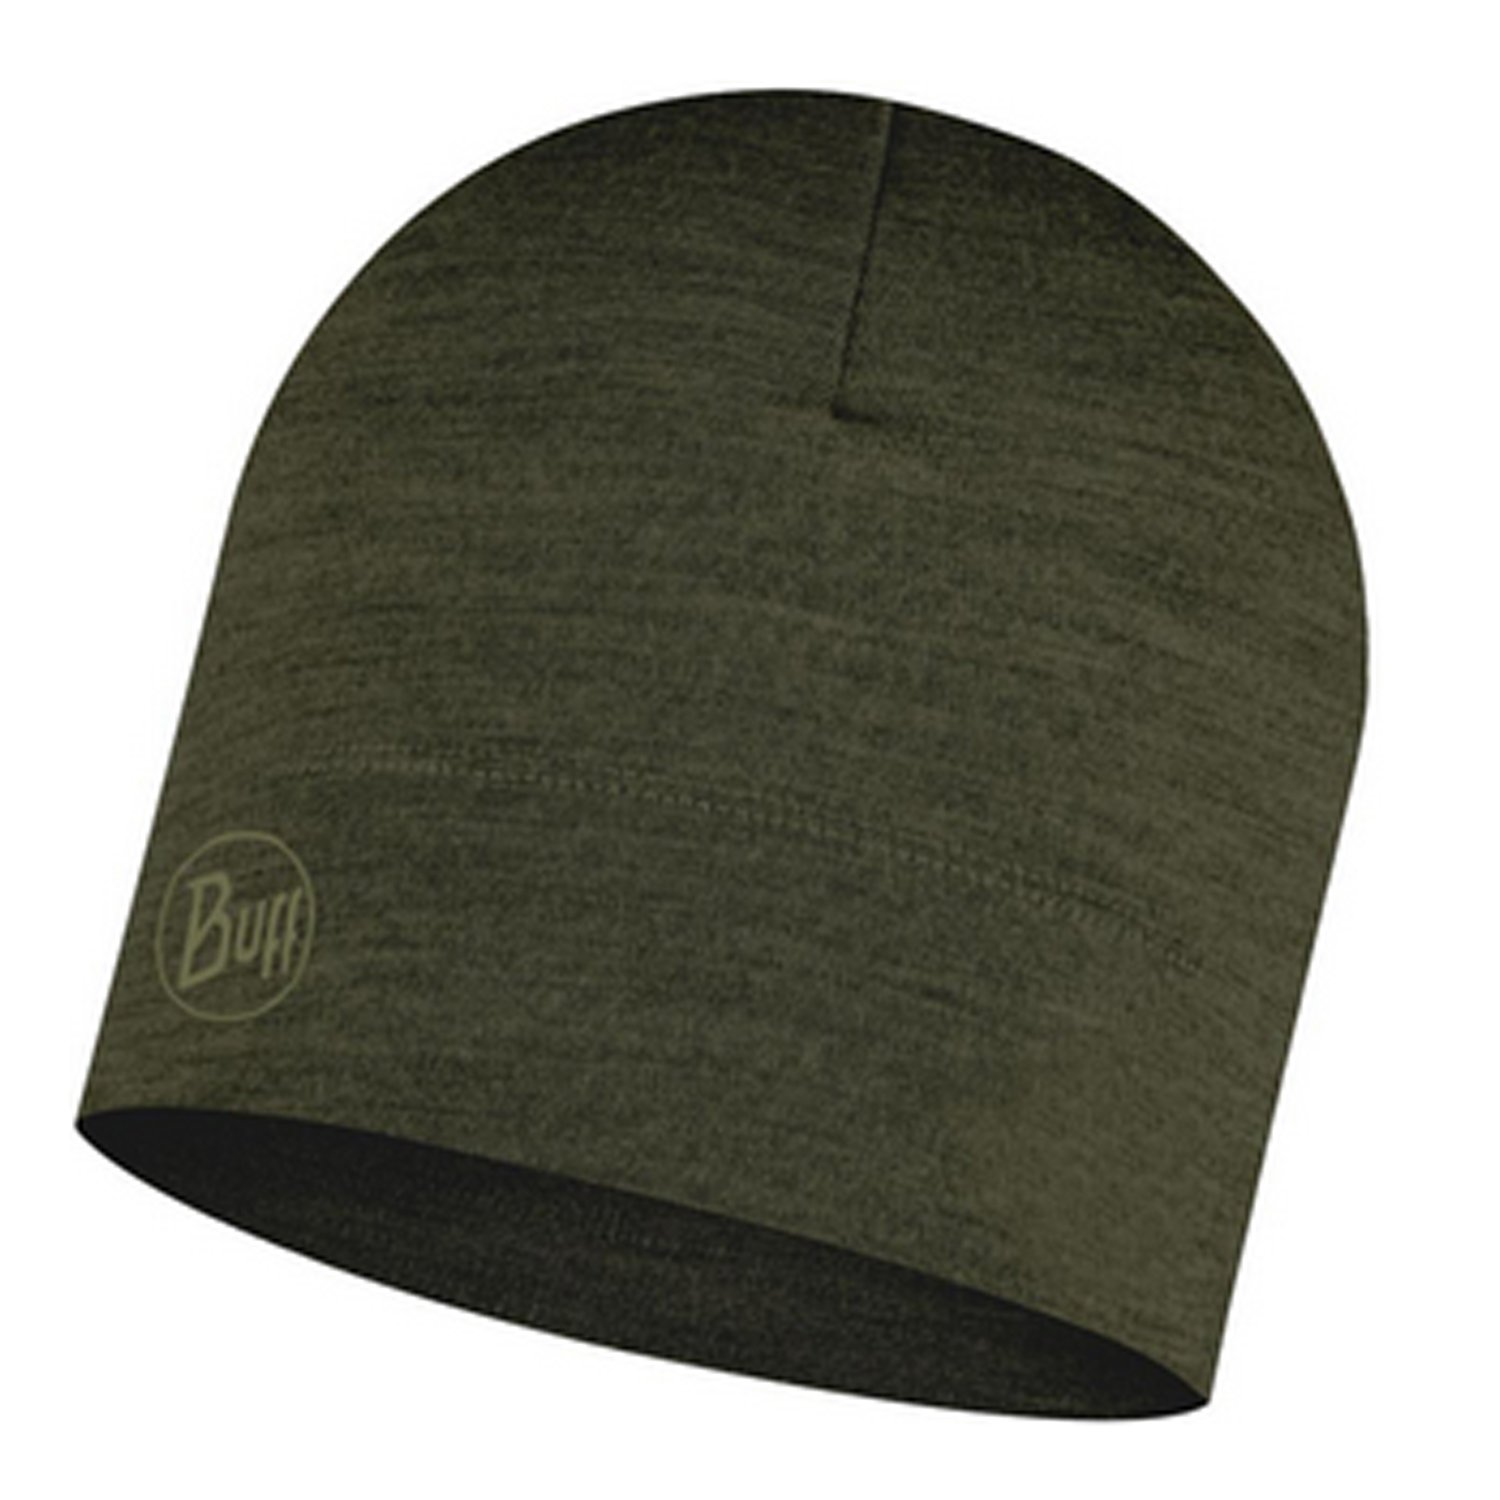 Шапка Buff Merino Lightweight Hat Solid Bark, зеленый, 2022-23, 113013.843.10.00 шапка buff lw merino wool reversible hat pansy graphite multistripes us one size 123325 601 10 00